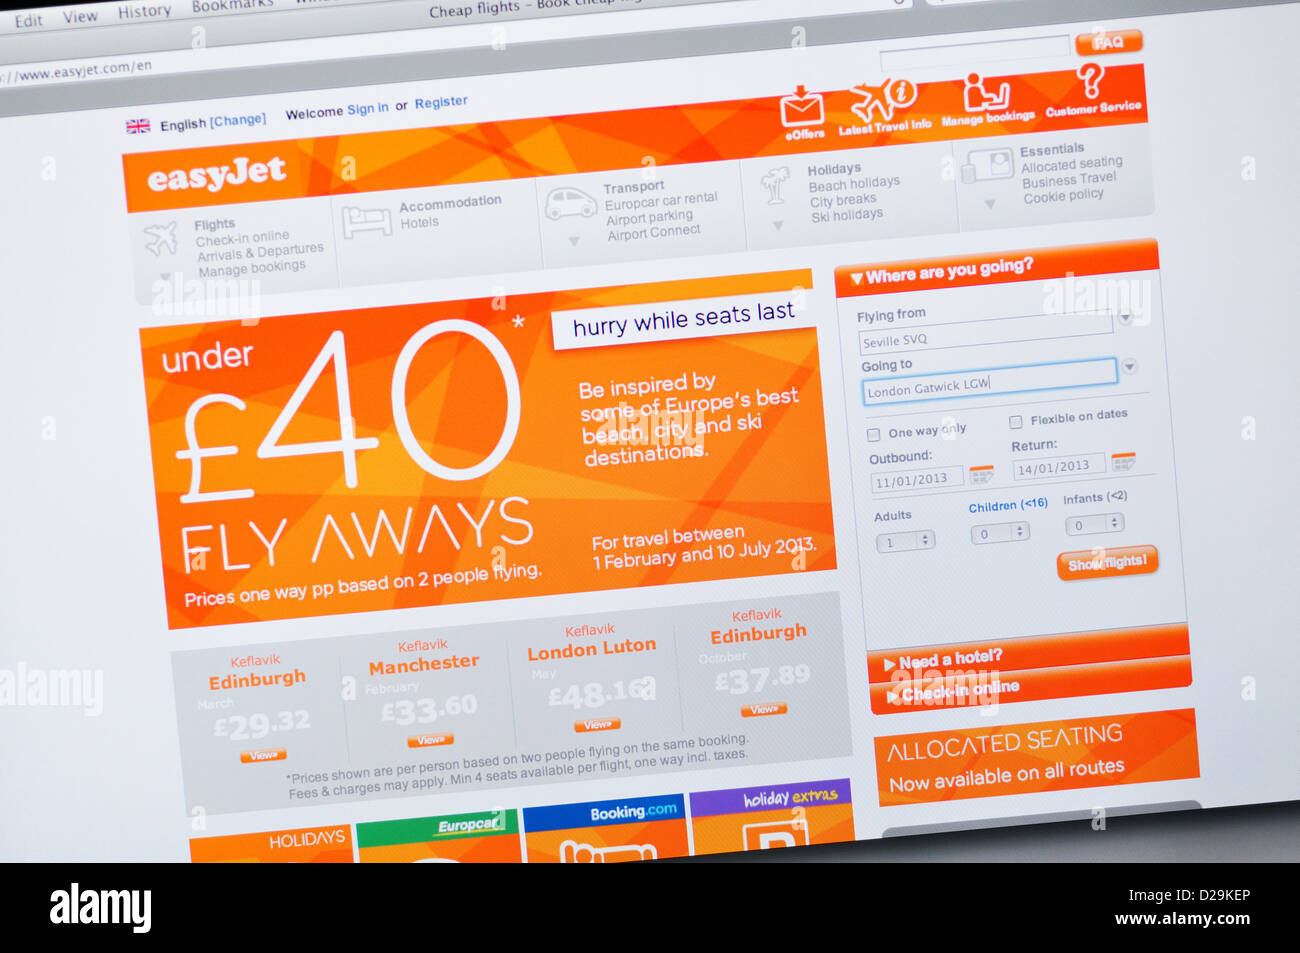 EasyJet website - Online discount airline tickets Stock Photo